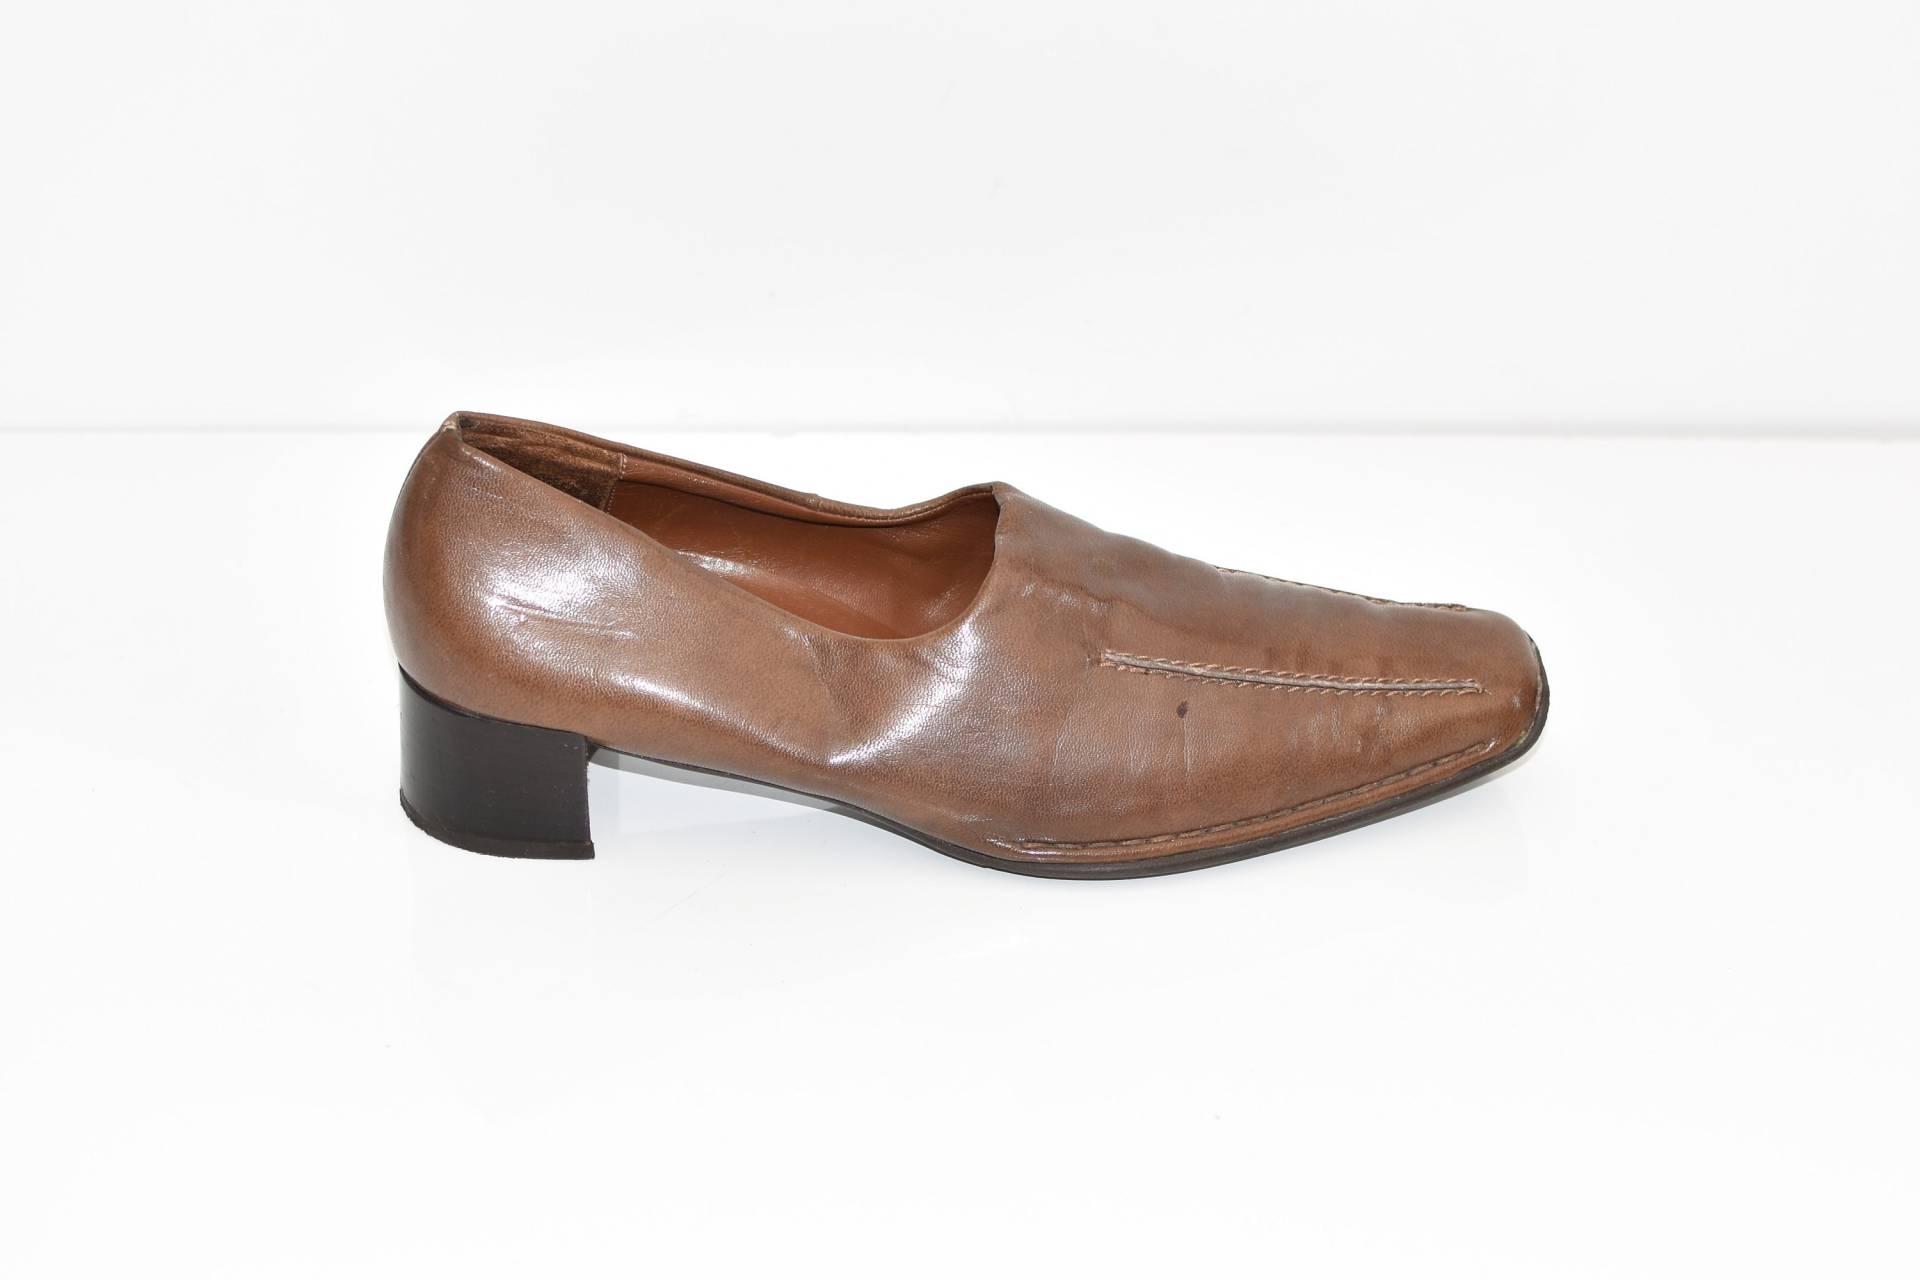 Vintage Semler Damen Leder Stiefel Ankle Boots Pull On Low Heel Braun Gr.8, 5 Eur41 von VintageVaidaBoutique